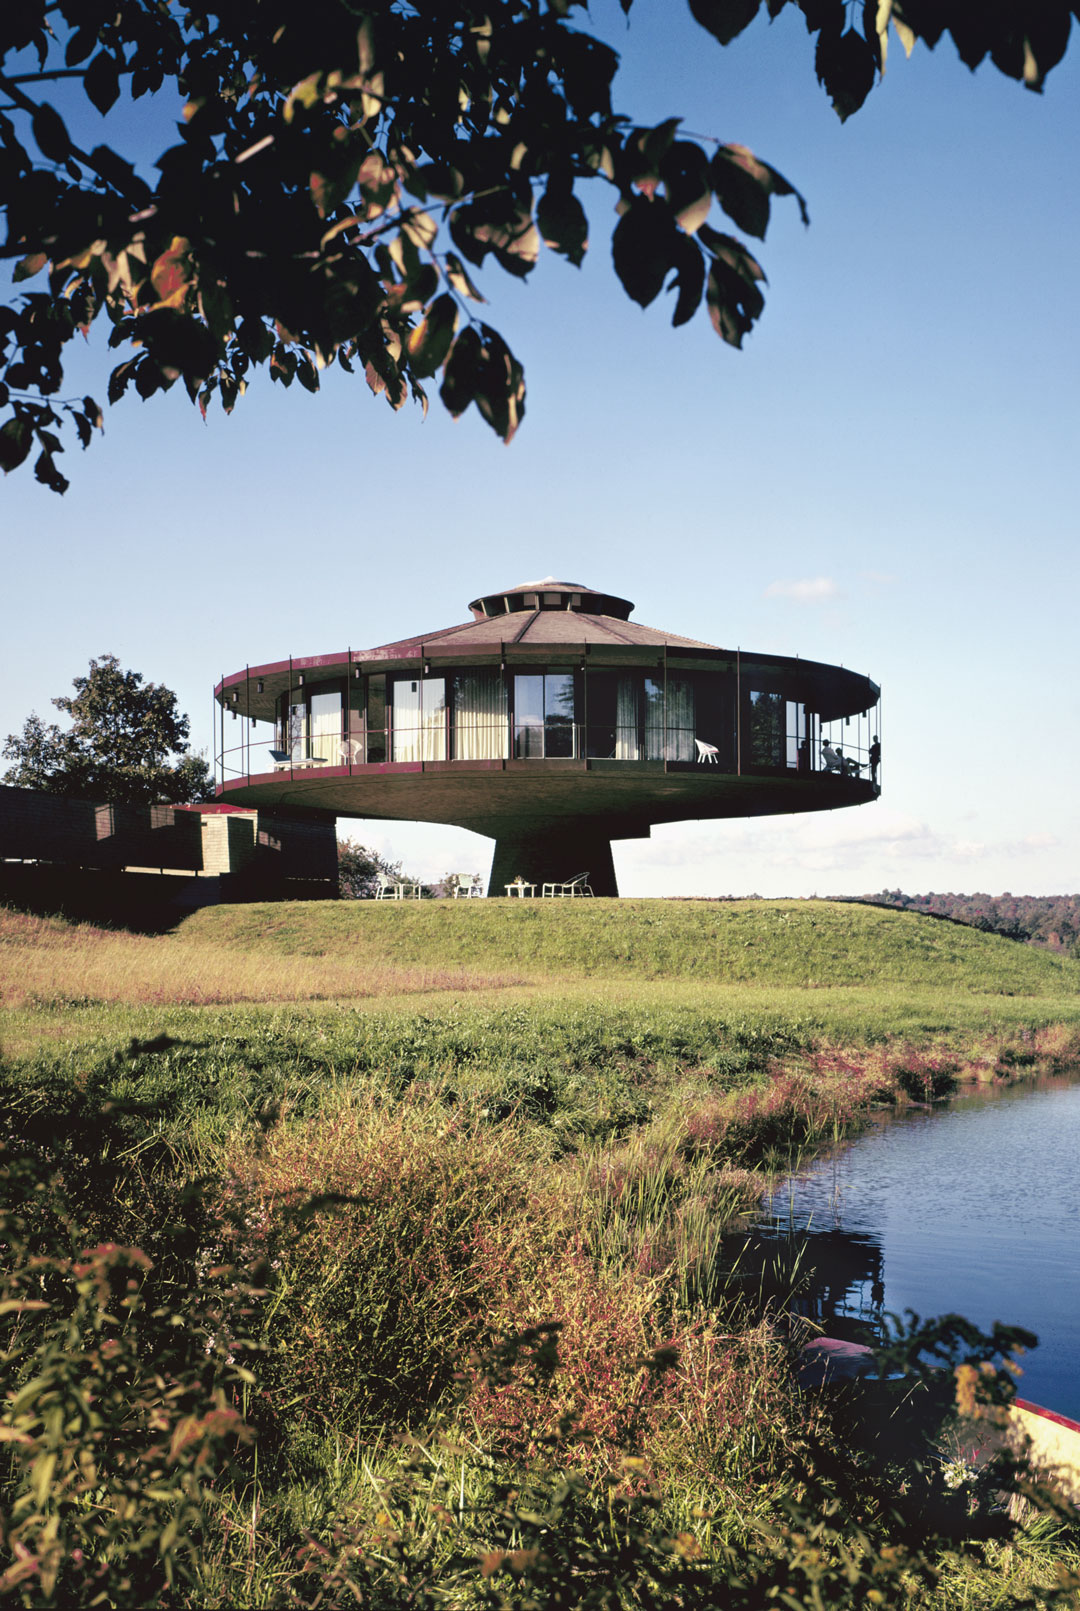 Round House, Richard Foster, Wilton, Connecticut, (US), 1968